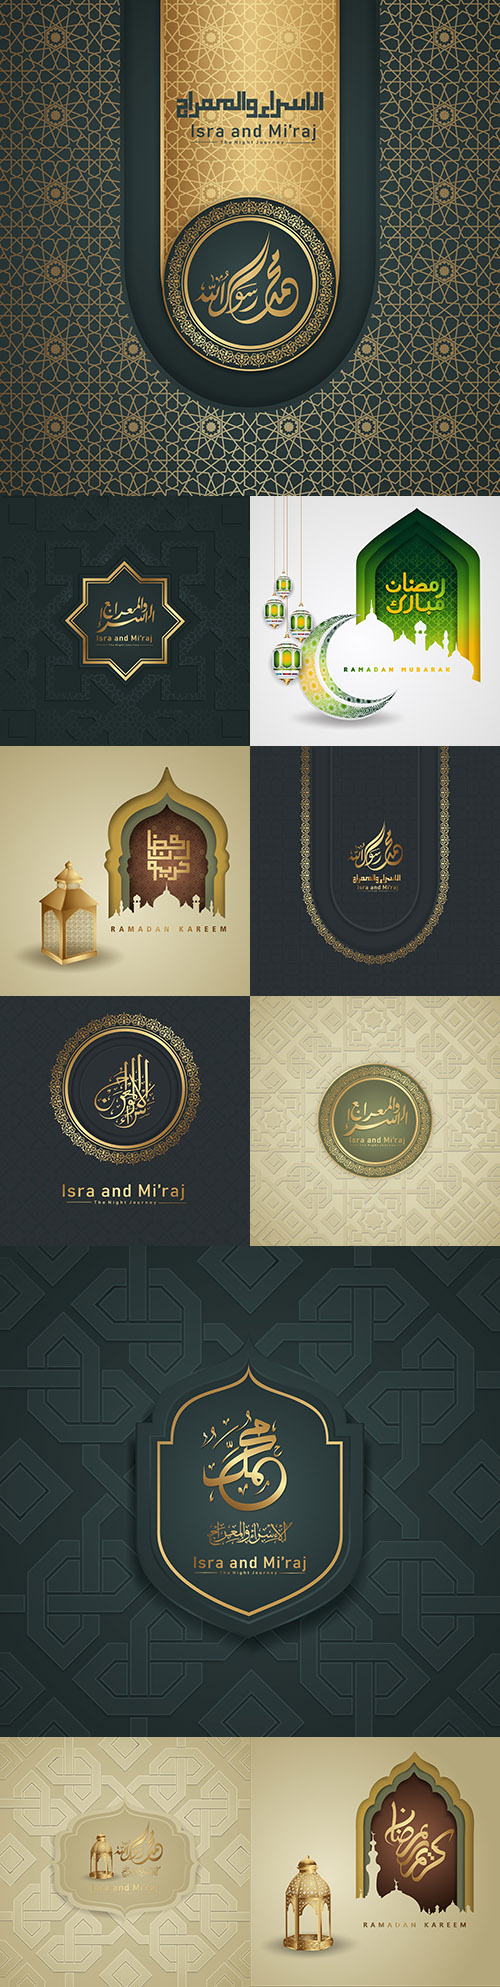 Isra and Mi'raj and elegant Ramadan design with Arabic calligraphy